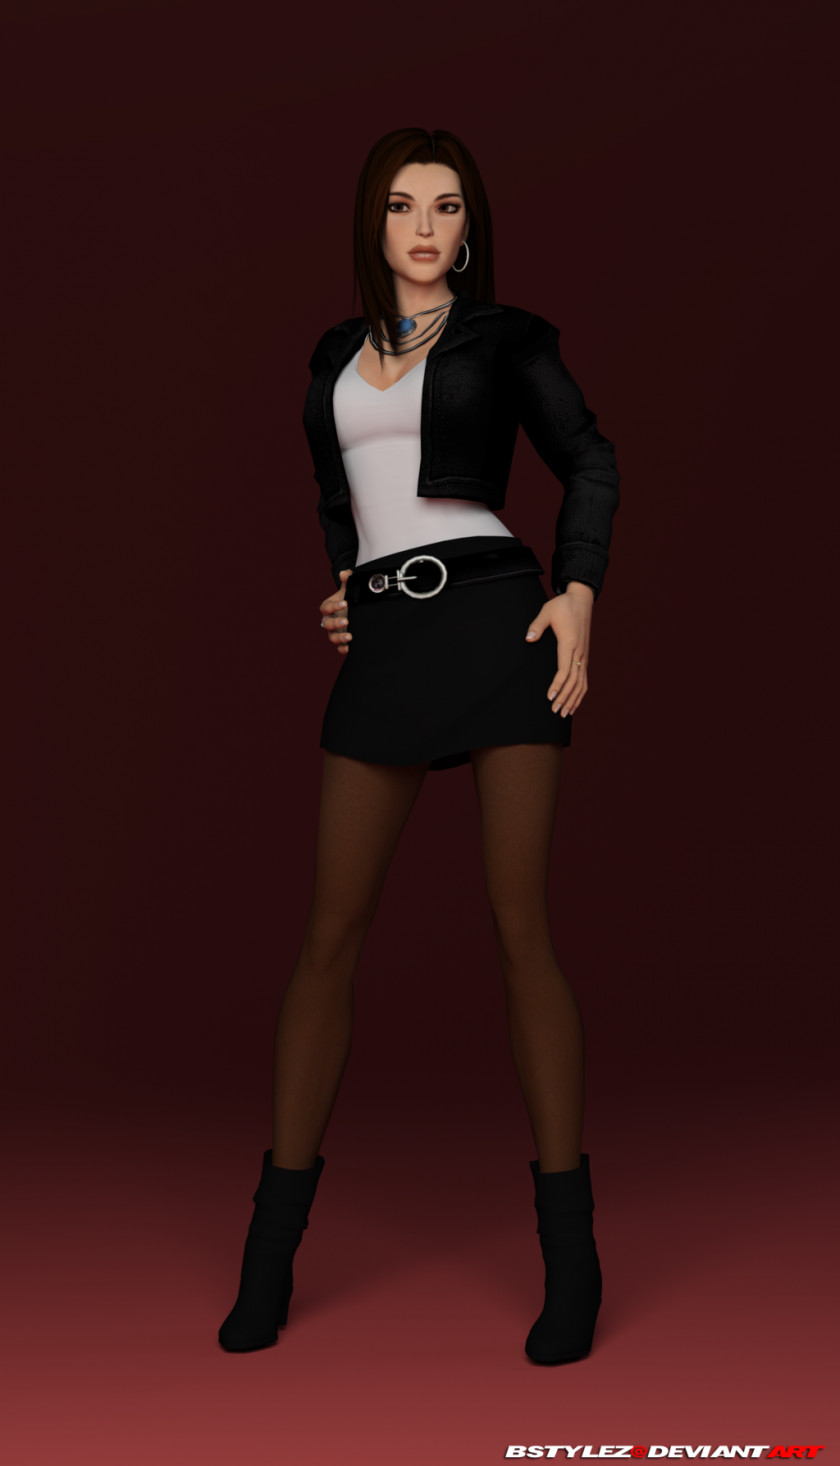 Lara Croft The Sims 4 Fashion Model United States Navy Clothing PNG